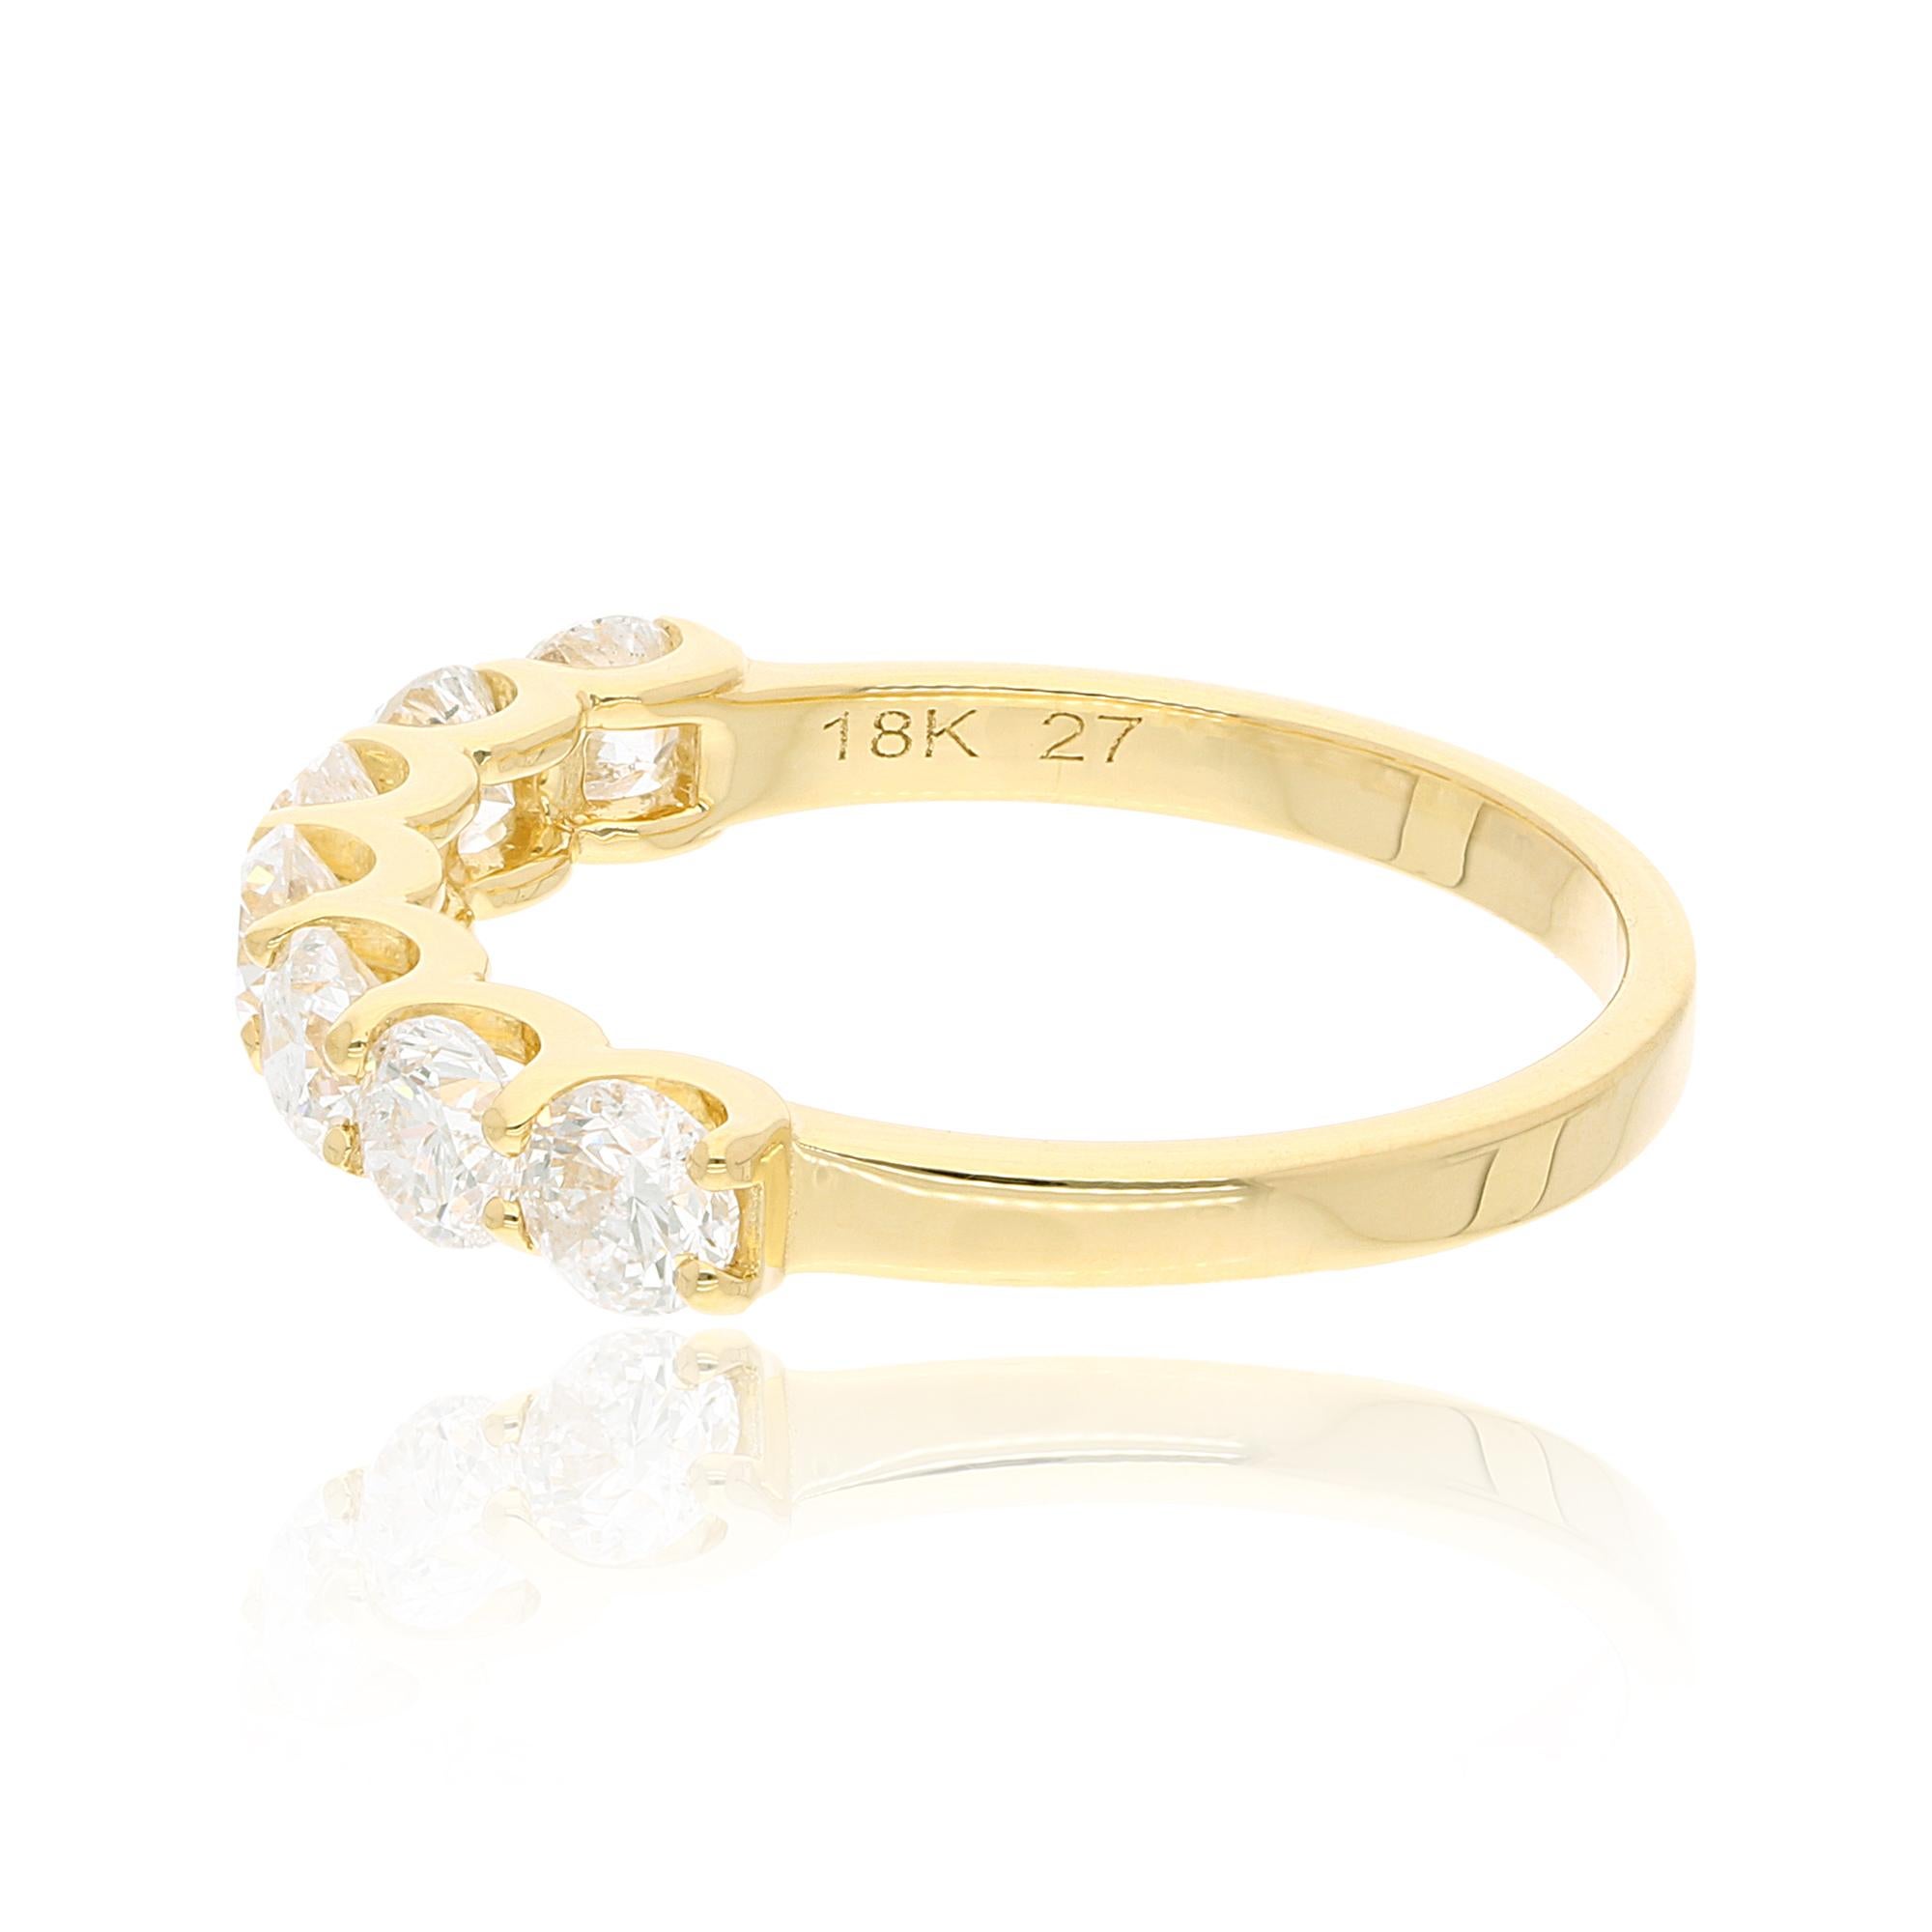 For Sale:  1.30 Carat SI Clarity HI Color 7 Diamond Ring 18 Karat Yellow Gold Fine Jewelry 2